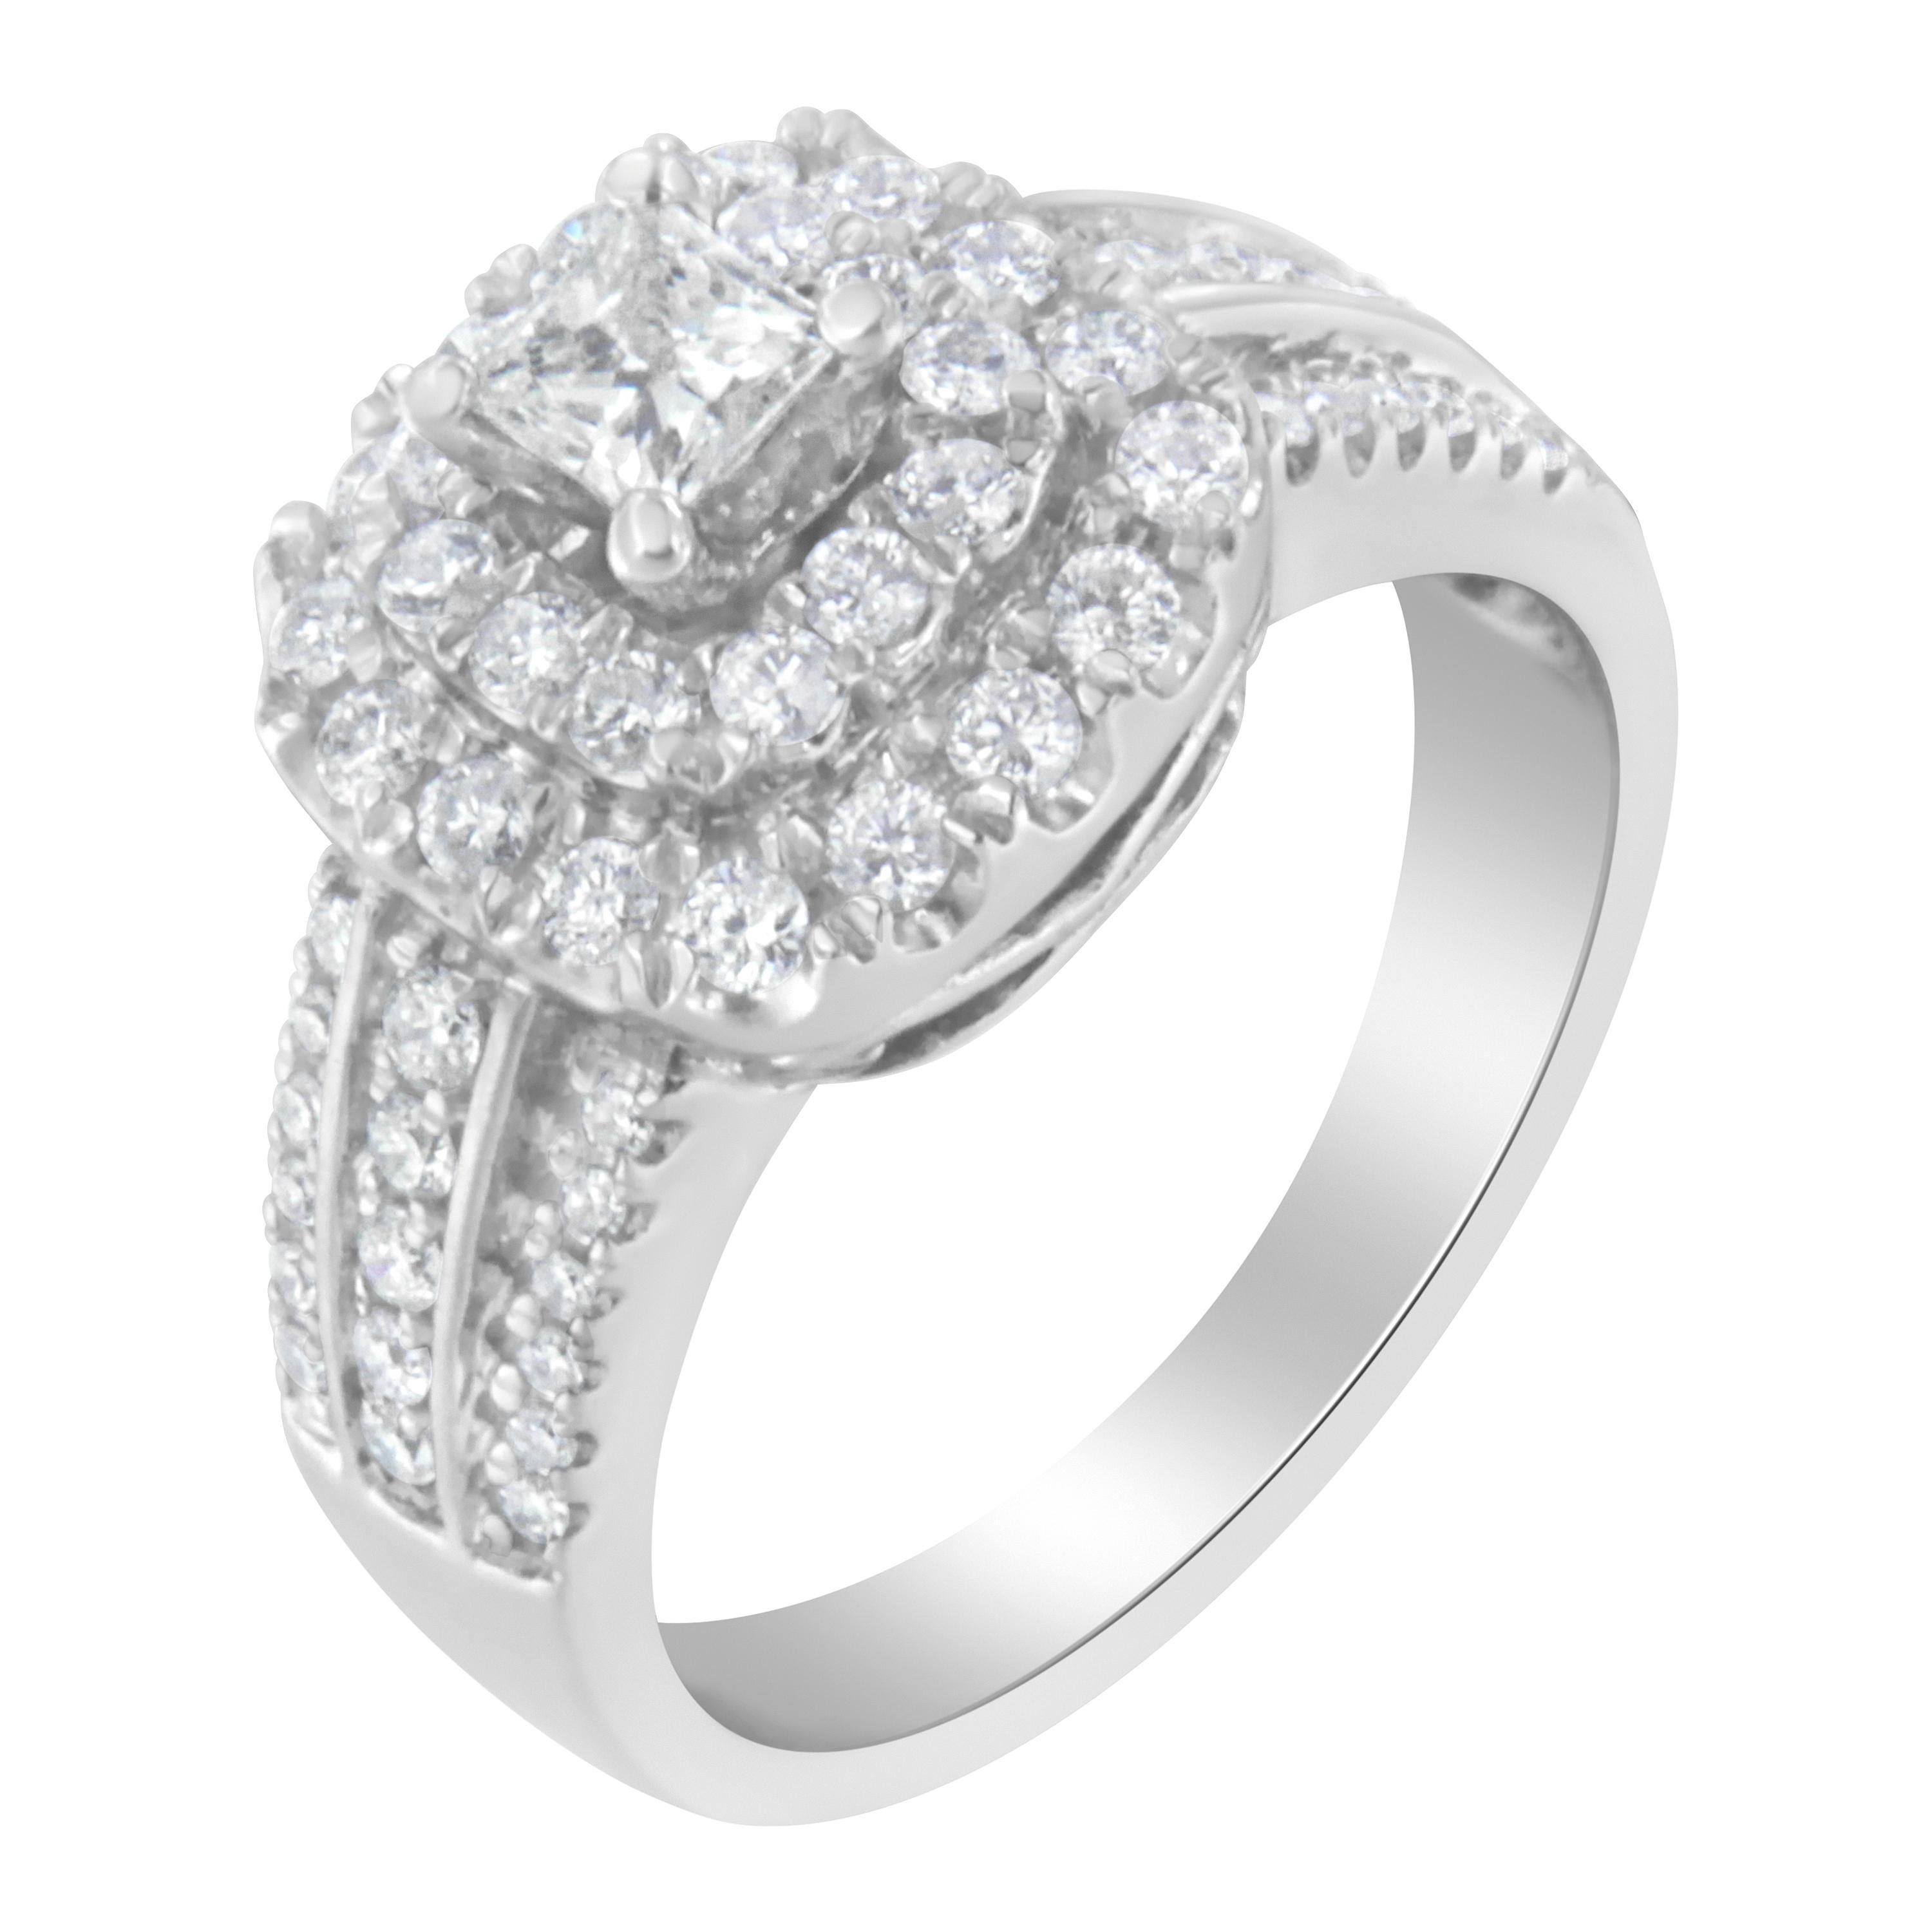 Contemporary 14K White Gold 1.0 Carat Diamond Cluster Ring